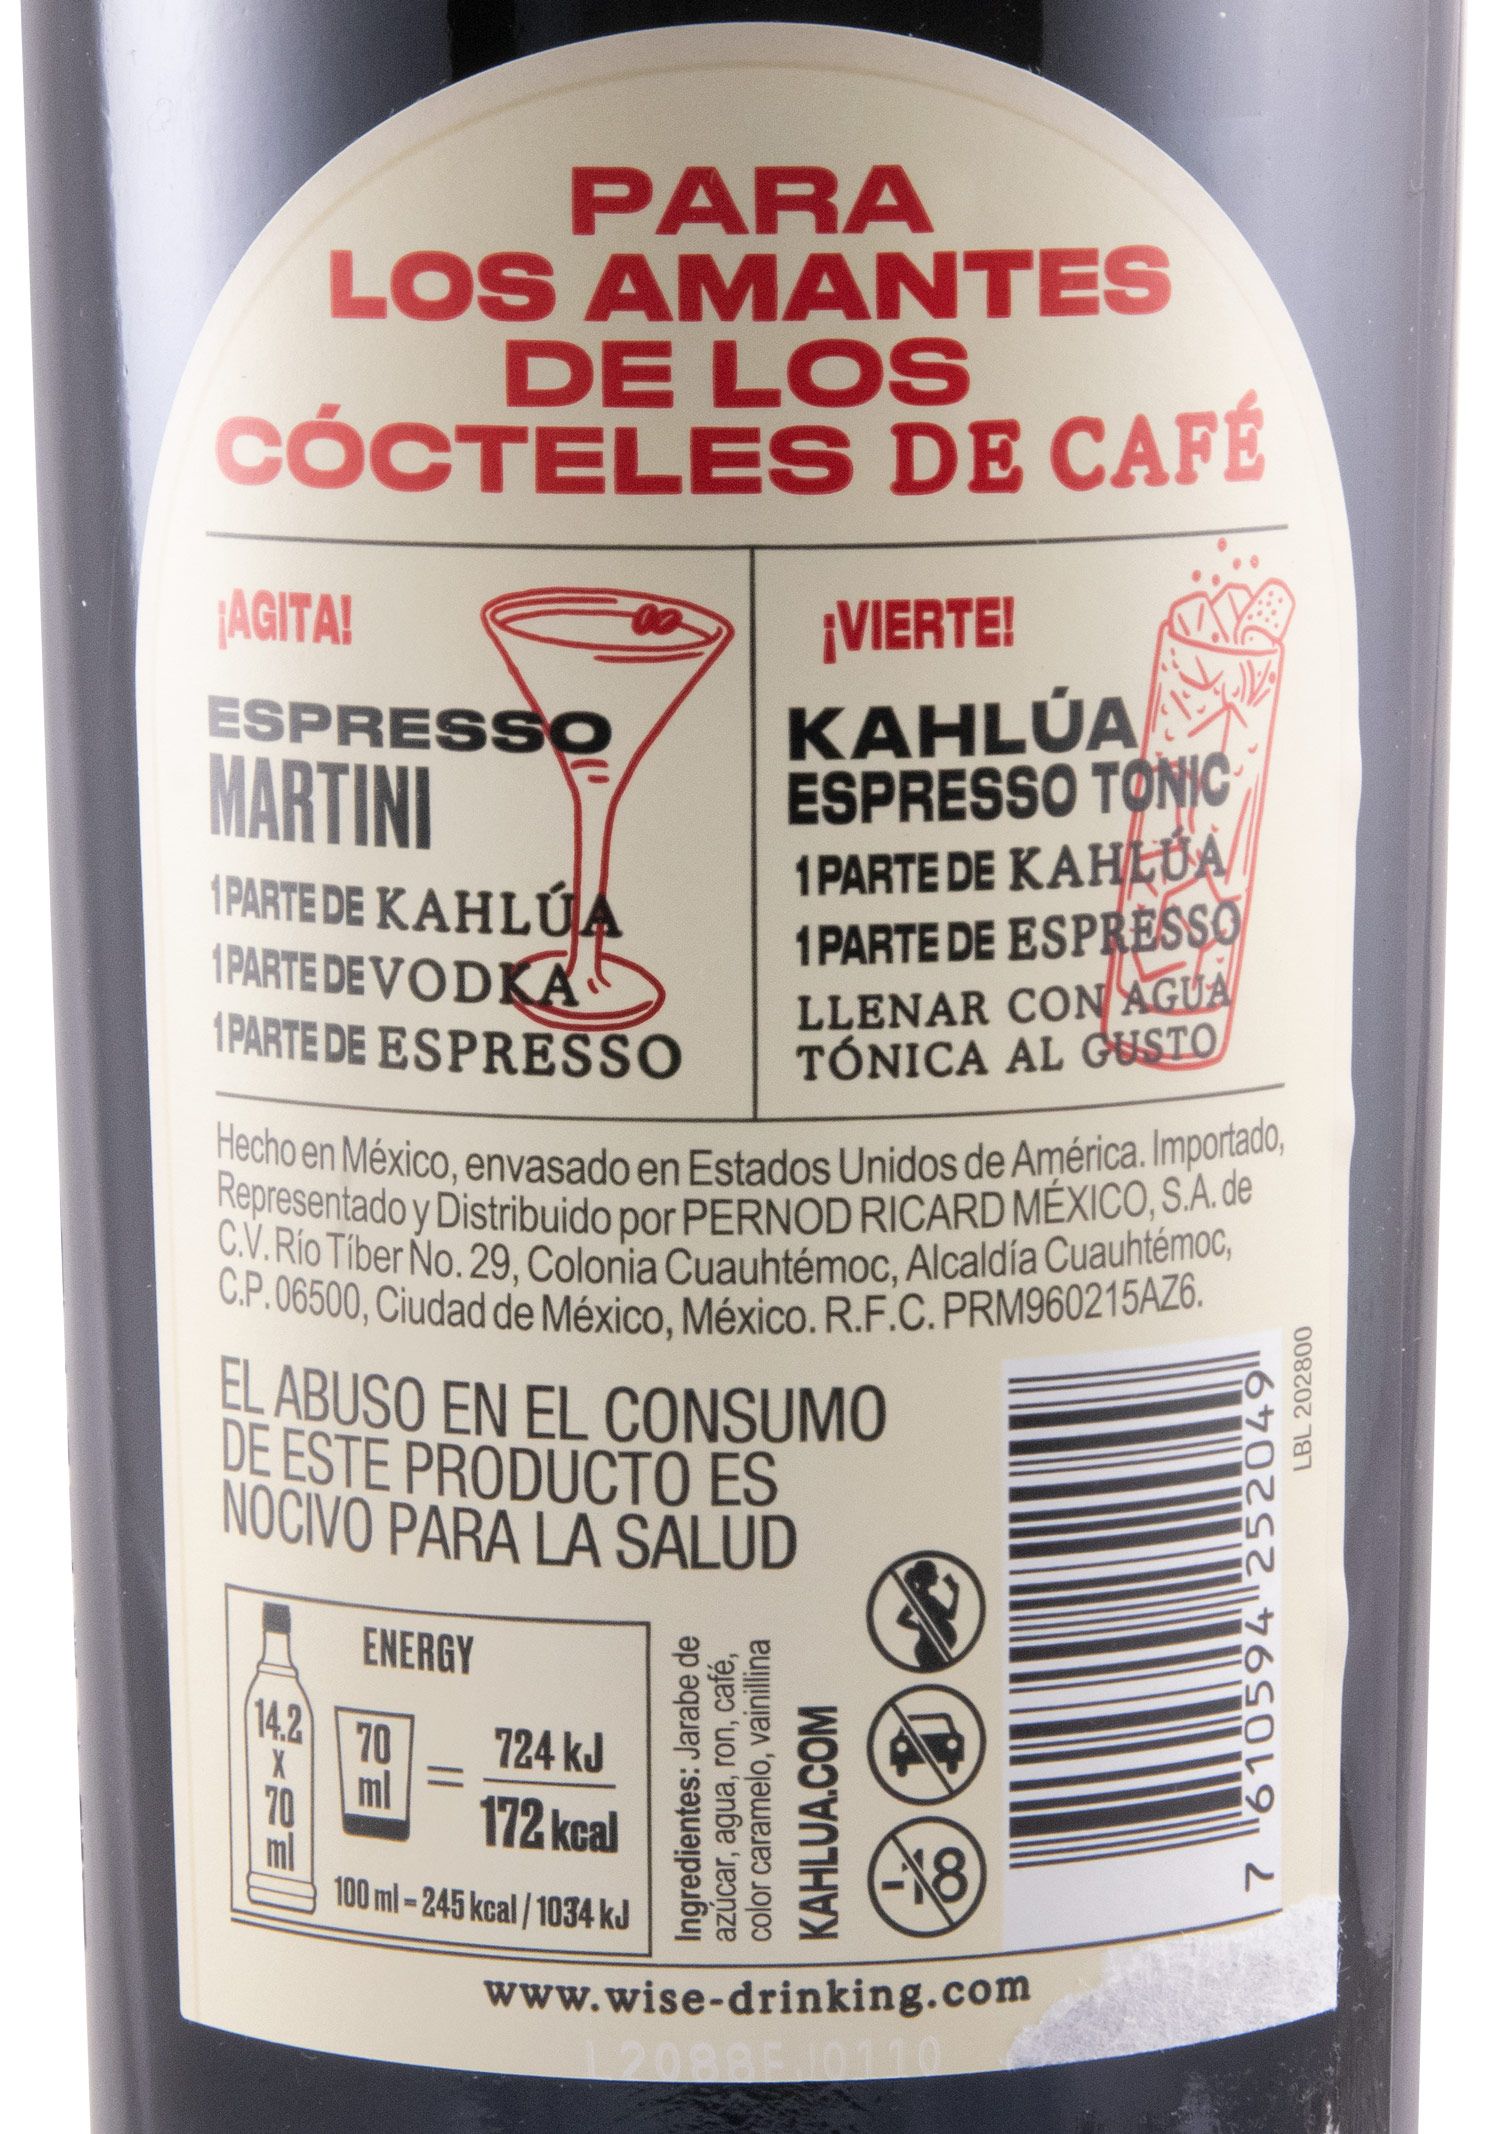 Coffee Liqueur Kahlúa 16% 1L